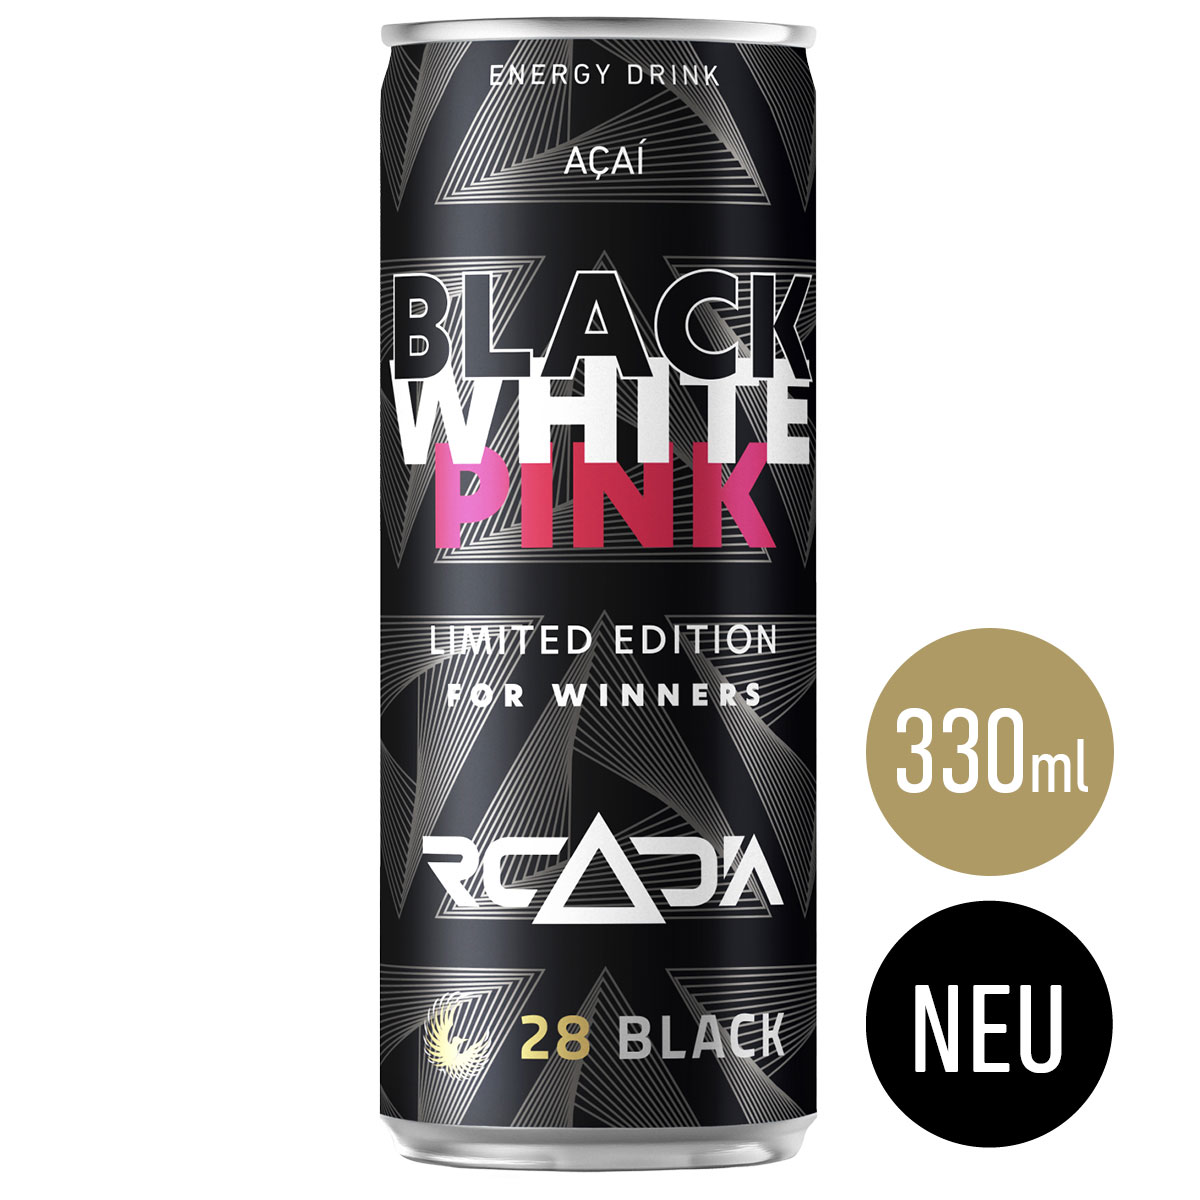 RCADIA BLACK LIMITED EDITION FOR WINNERS - 28 BLACK Açai 330ml - 24er Tray